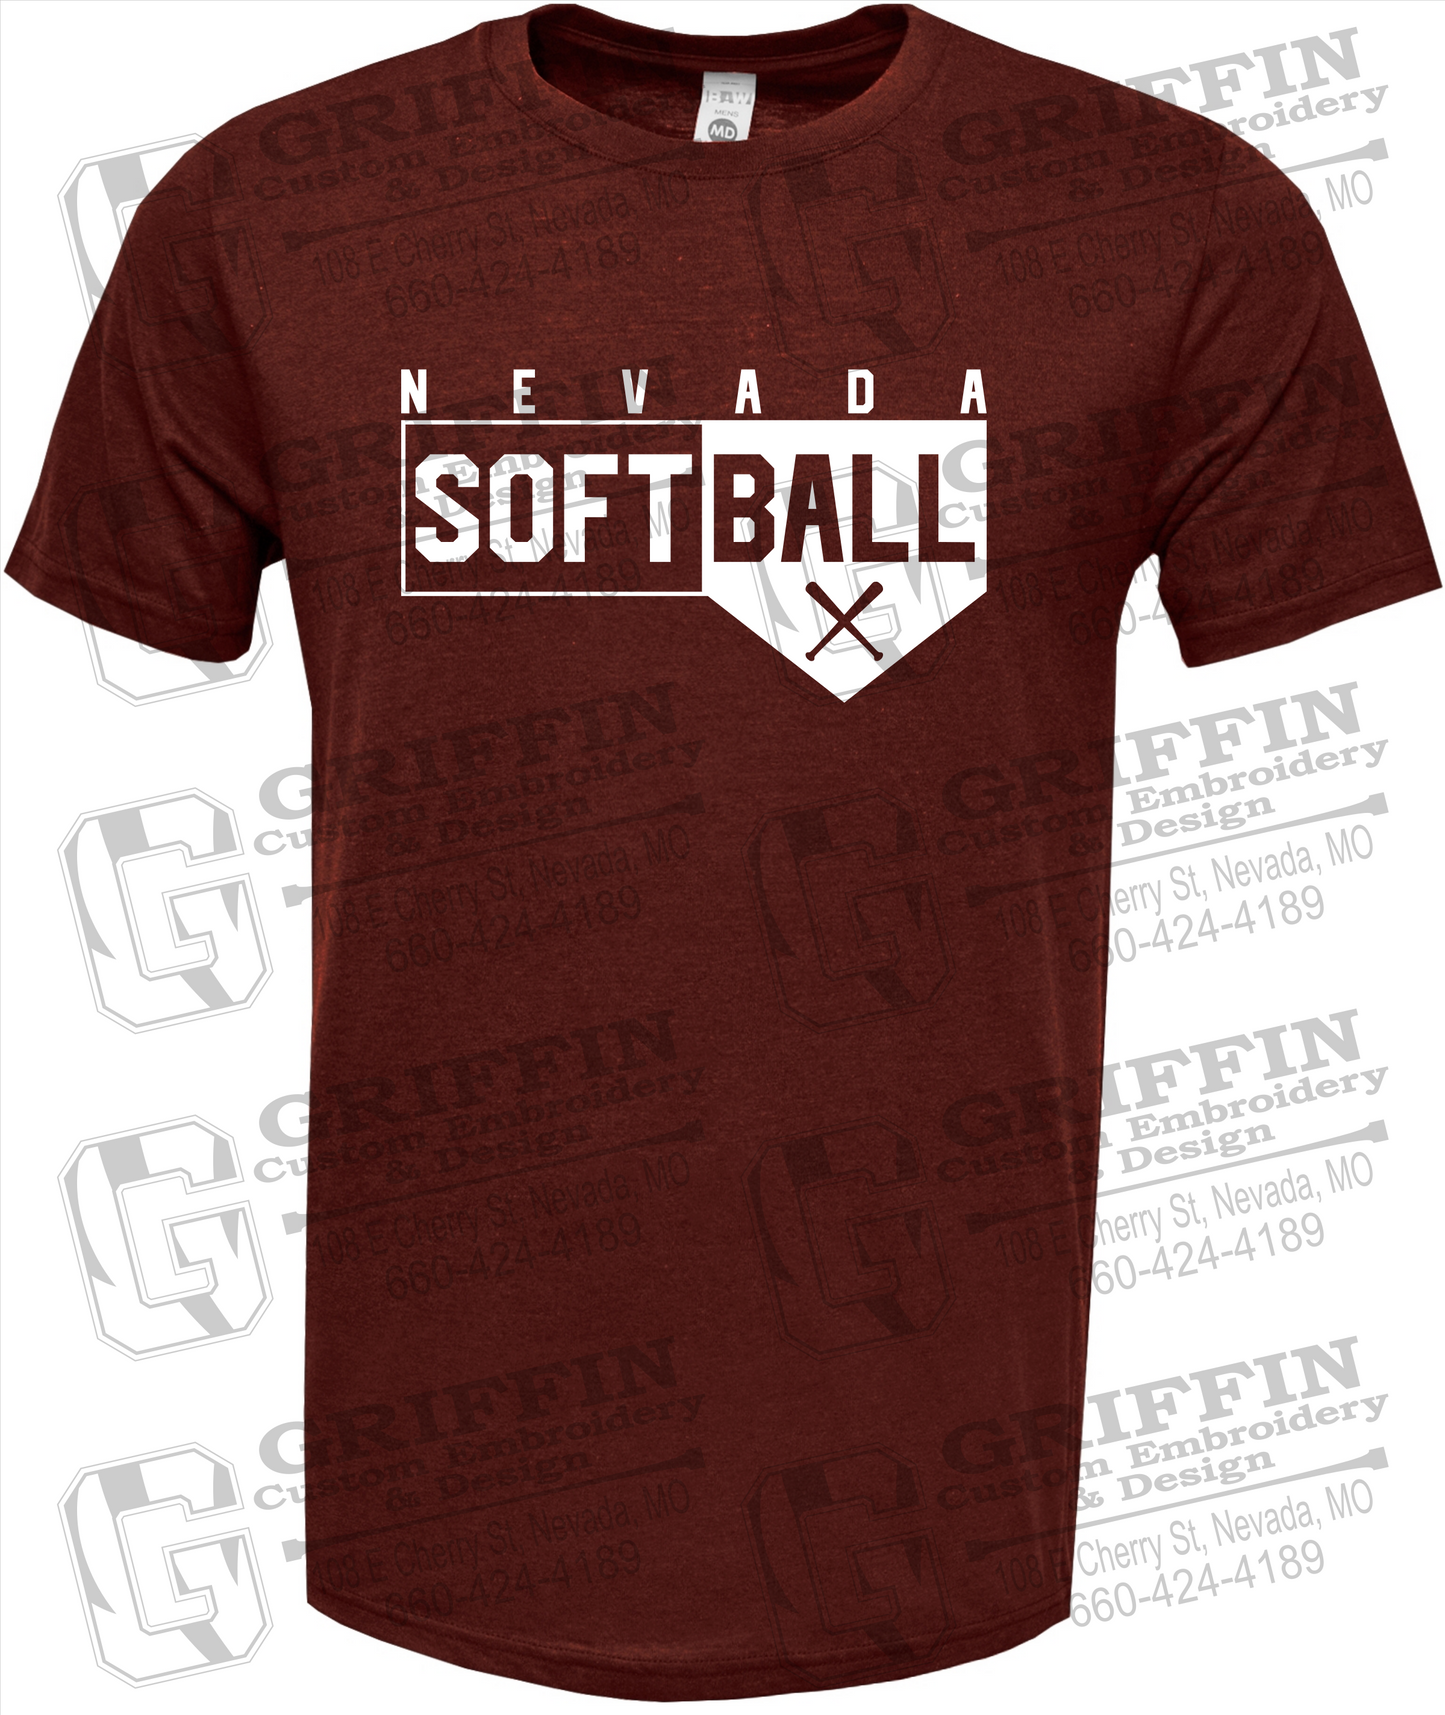 Soft-Tek Short Sleeve T-Shirt - Softball - Nevada Tigers 24-B